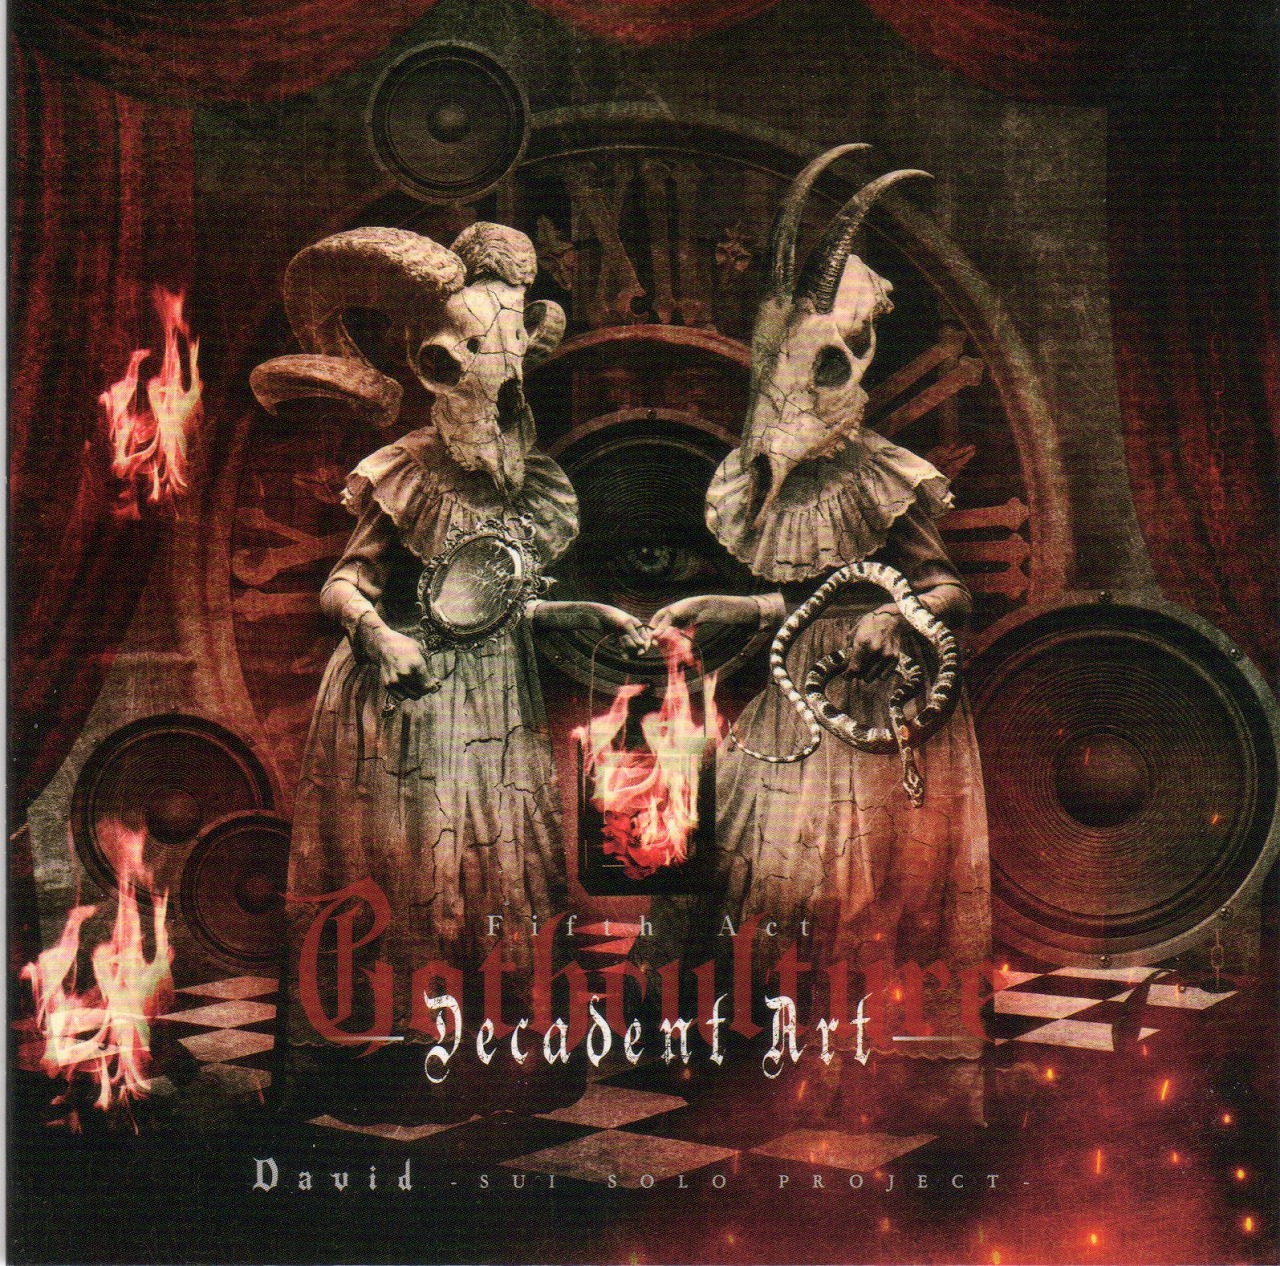 David ( ダヴィデ )  の CD Gothculture -Decadent Art-